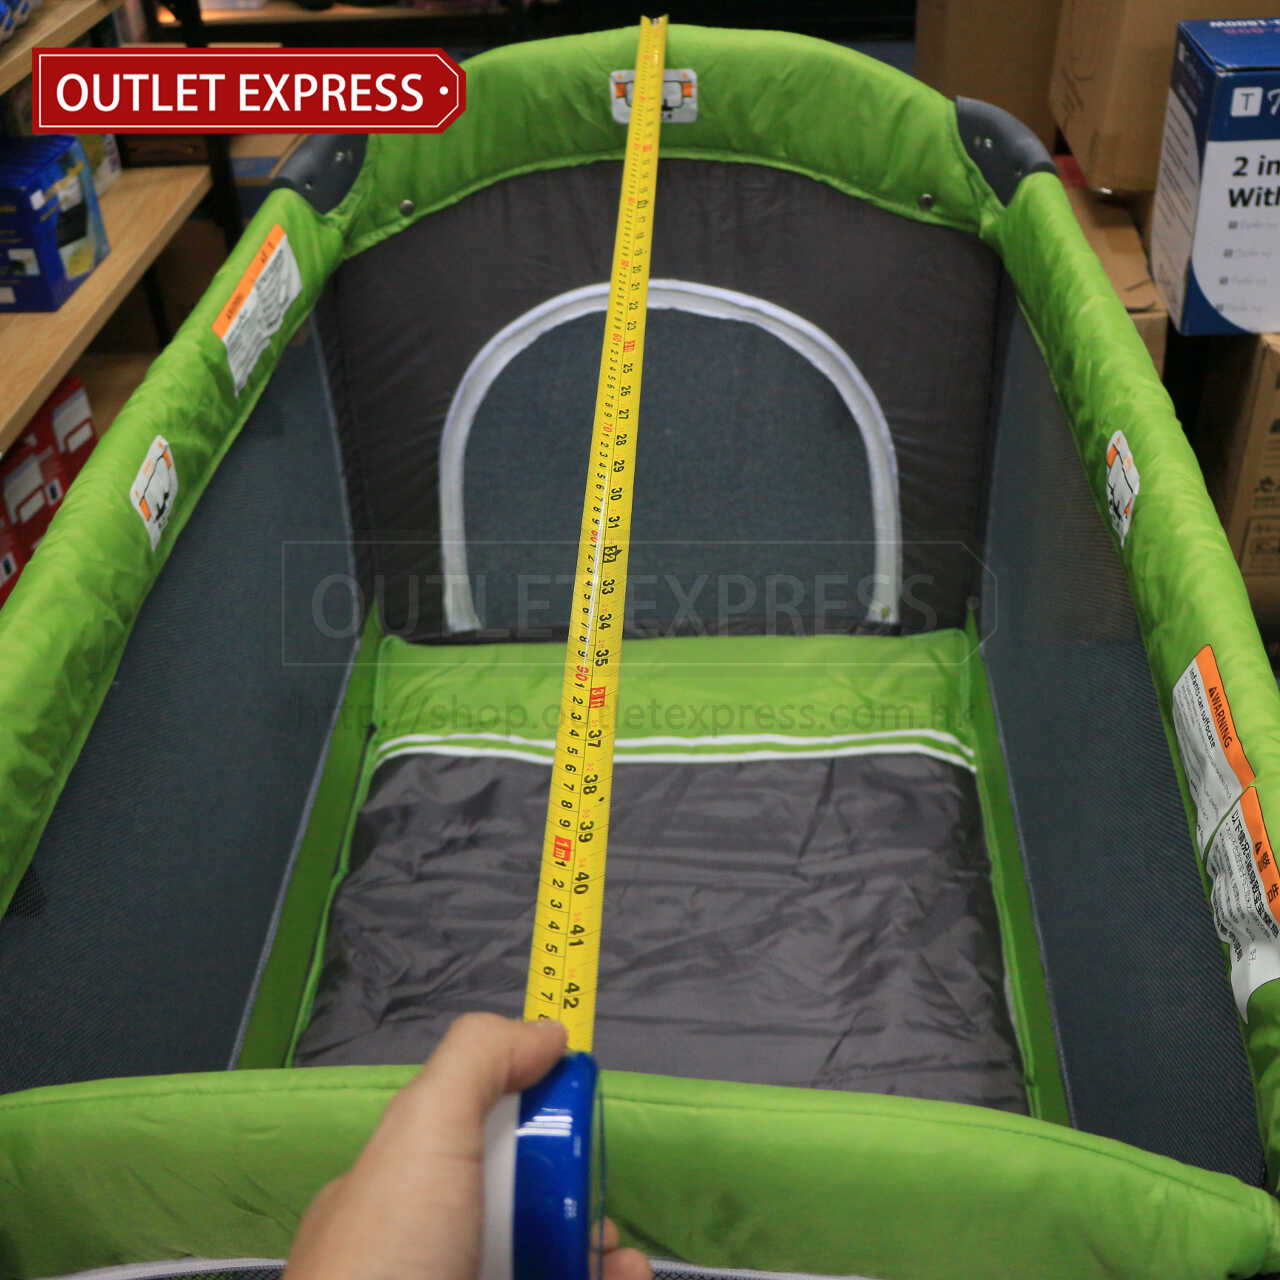 Babyface 歐式多功能可折疊嬰兒床BB床 - Outlet Express HK生活百貨城實拍相片